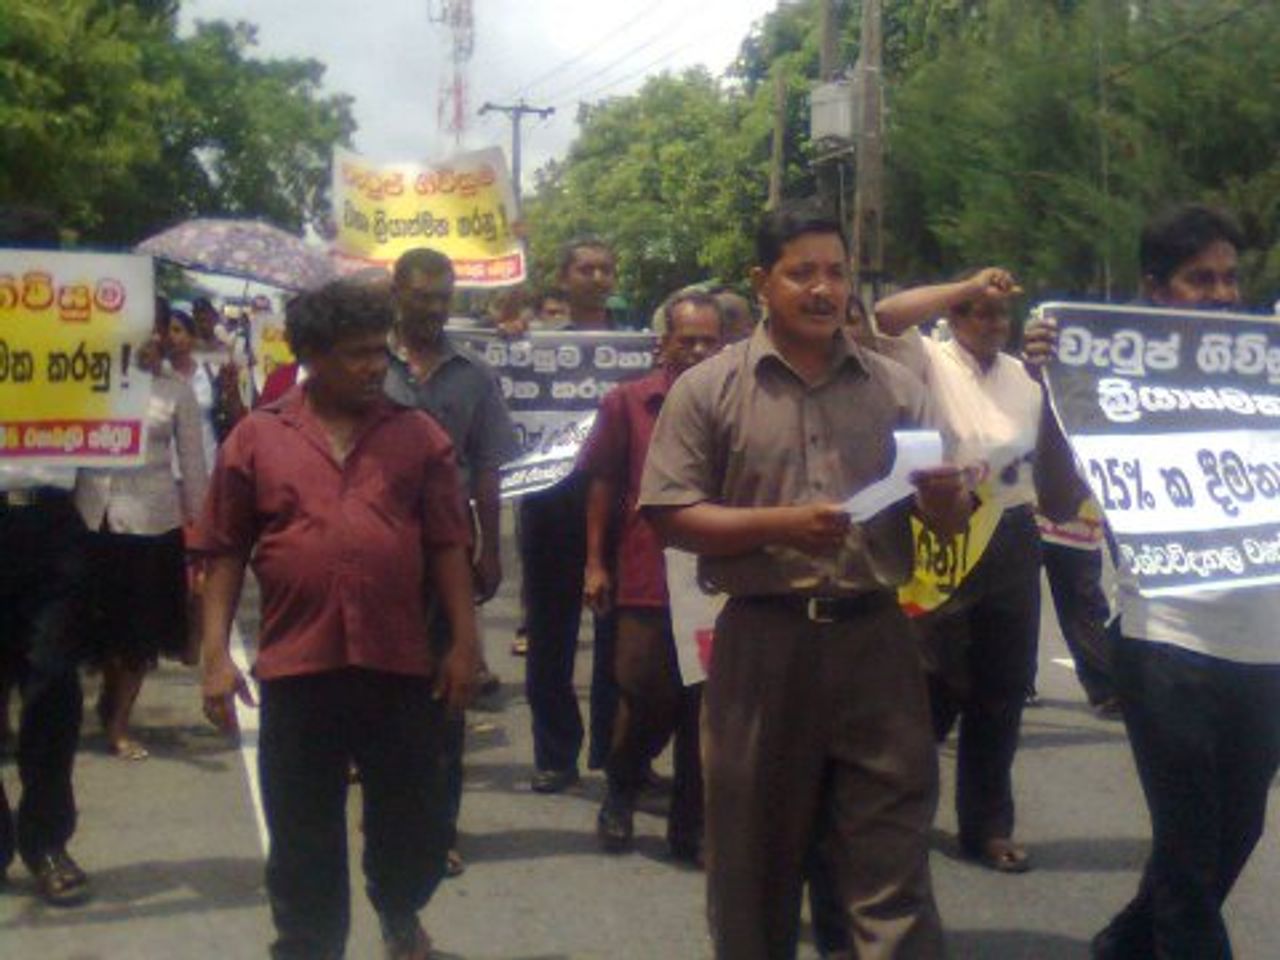 Moratuwa university workers marching to demand pay rise